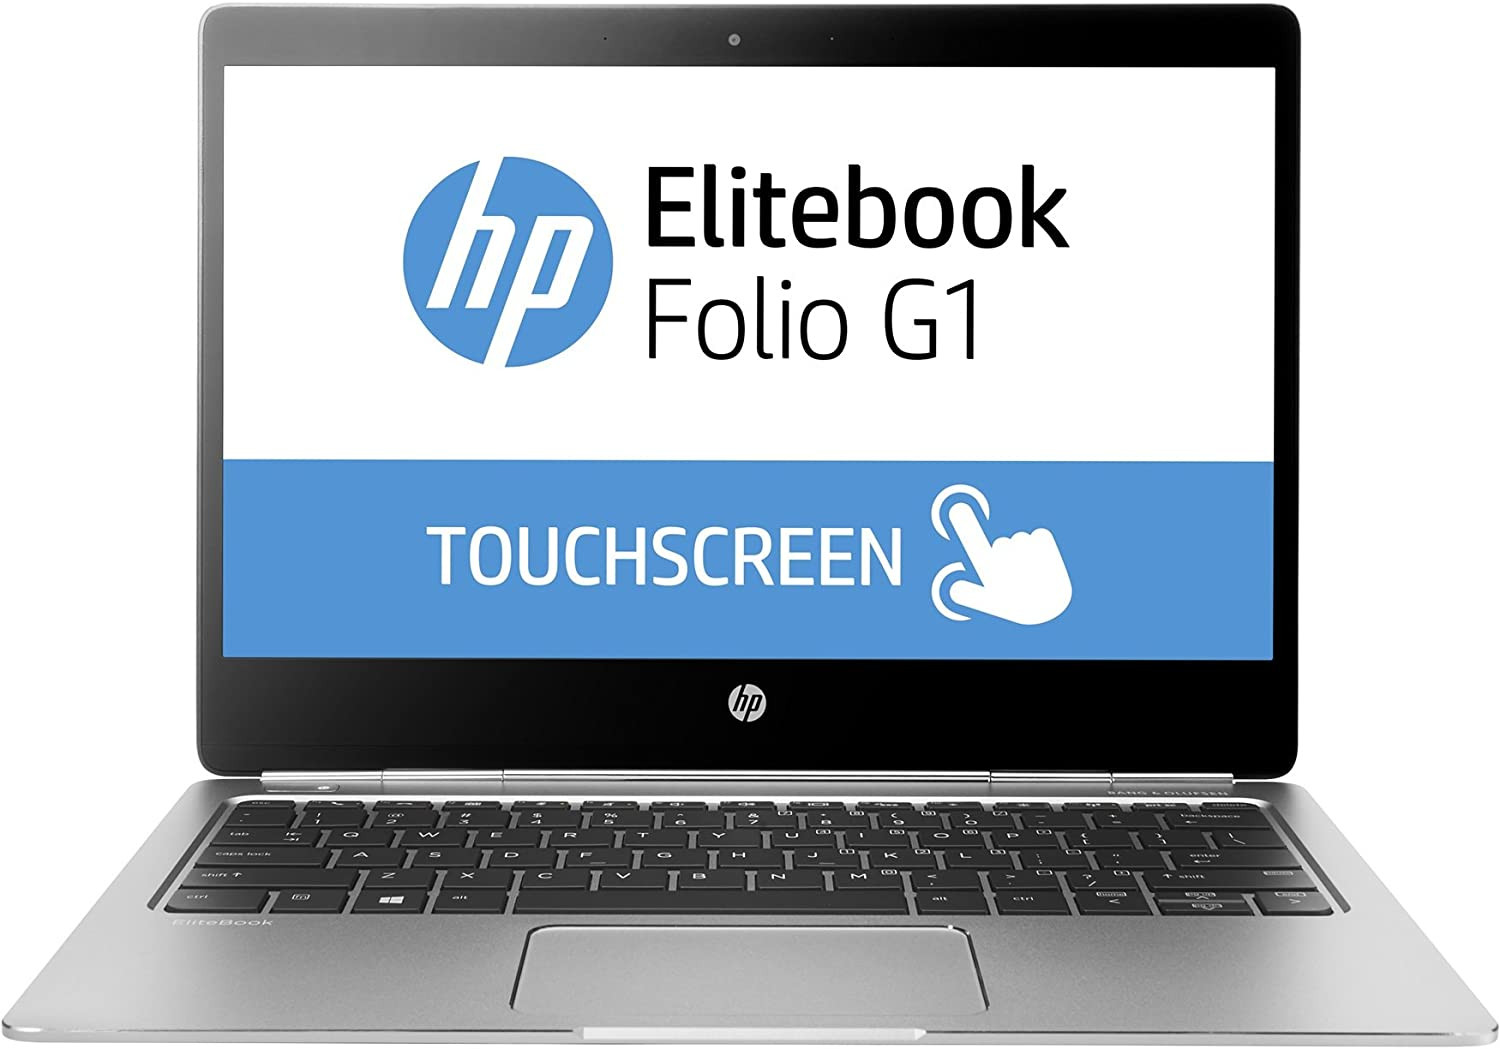 HP EliteBook Folio G1 TOUCH SCREEN/1.1GHz m5/ 8GB/ 120GB SSD/ WINDOWS 10 PRO